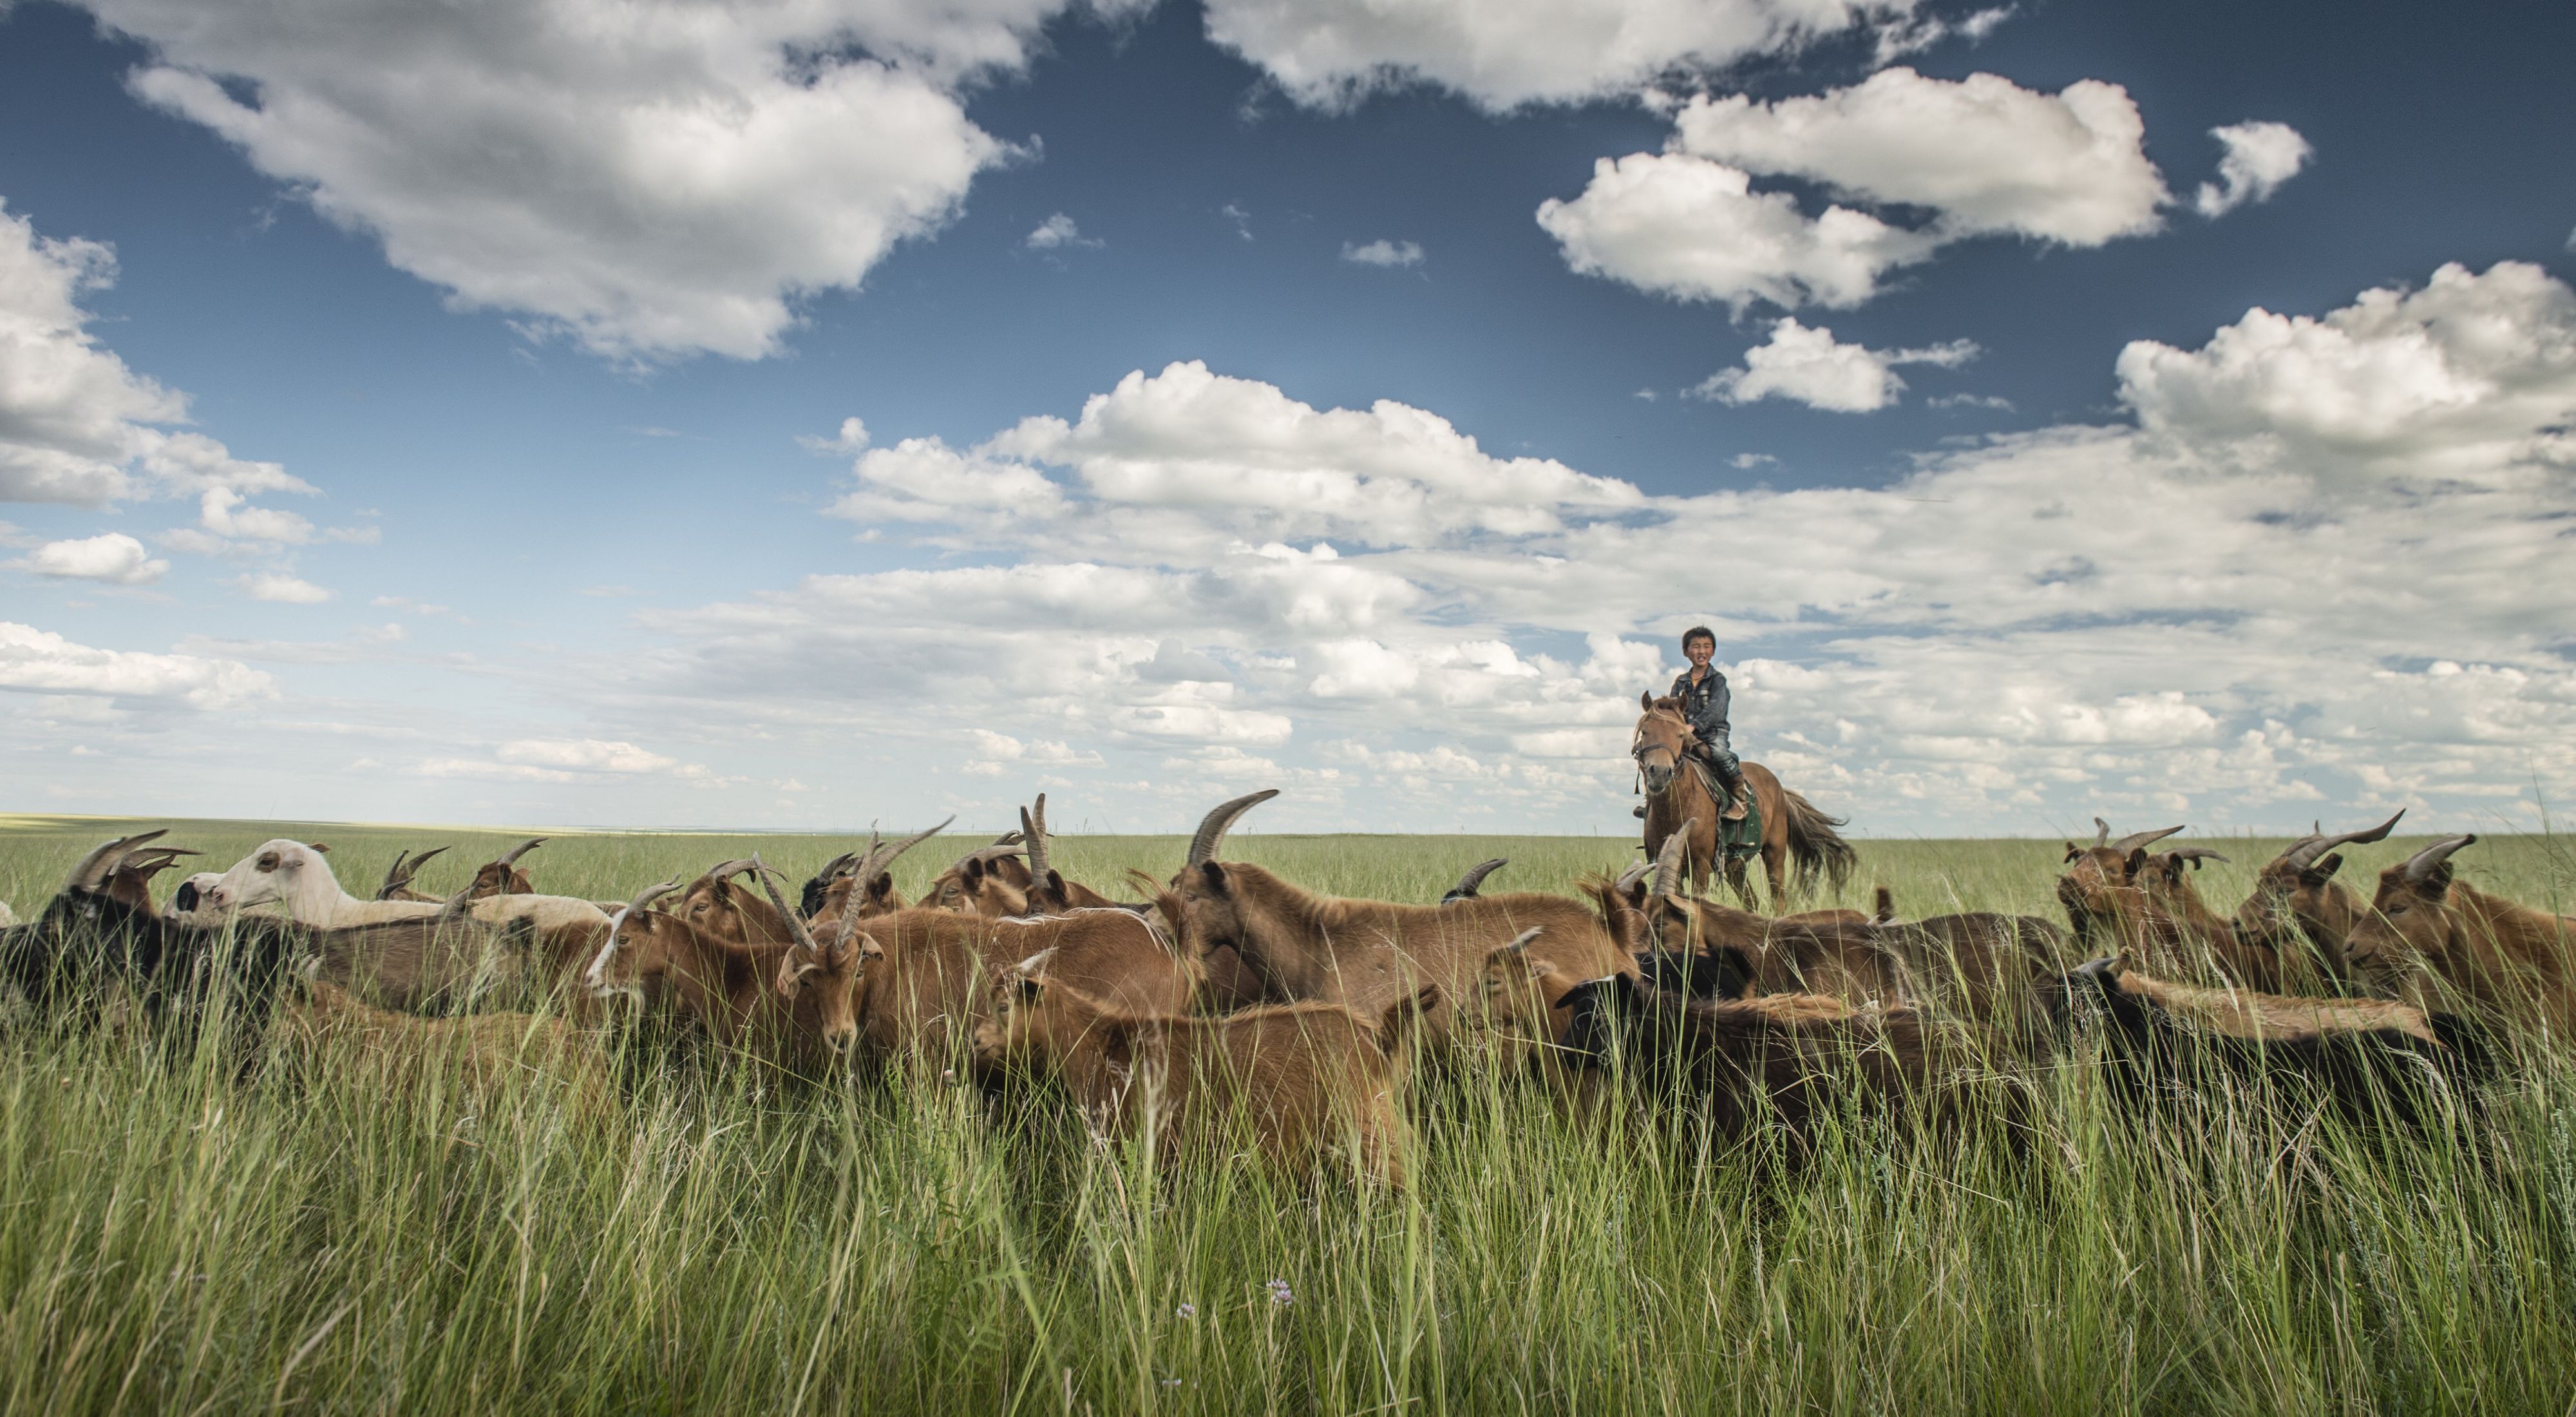 Mongolian herder on the grasslands.